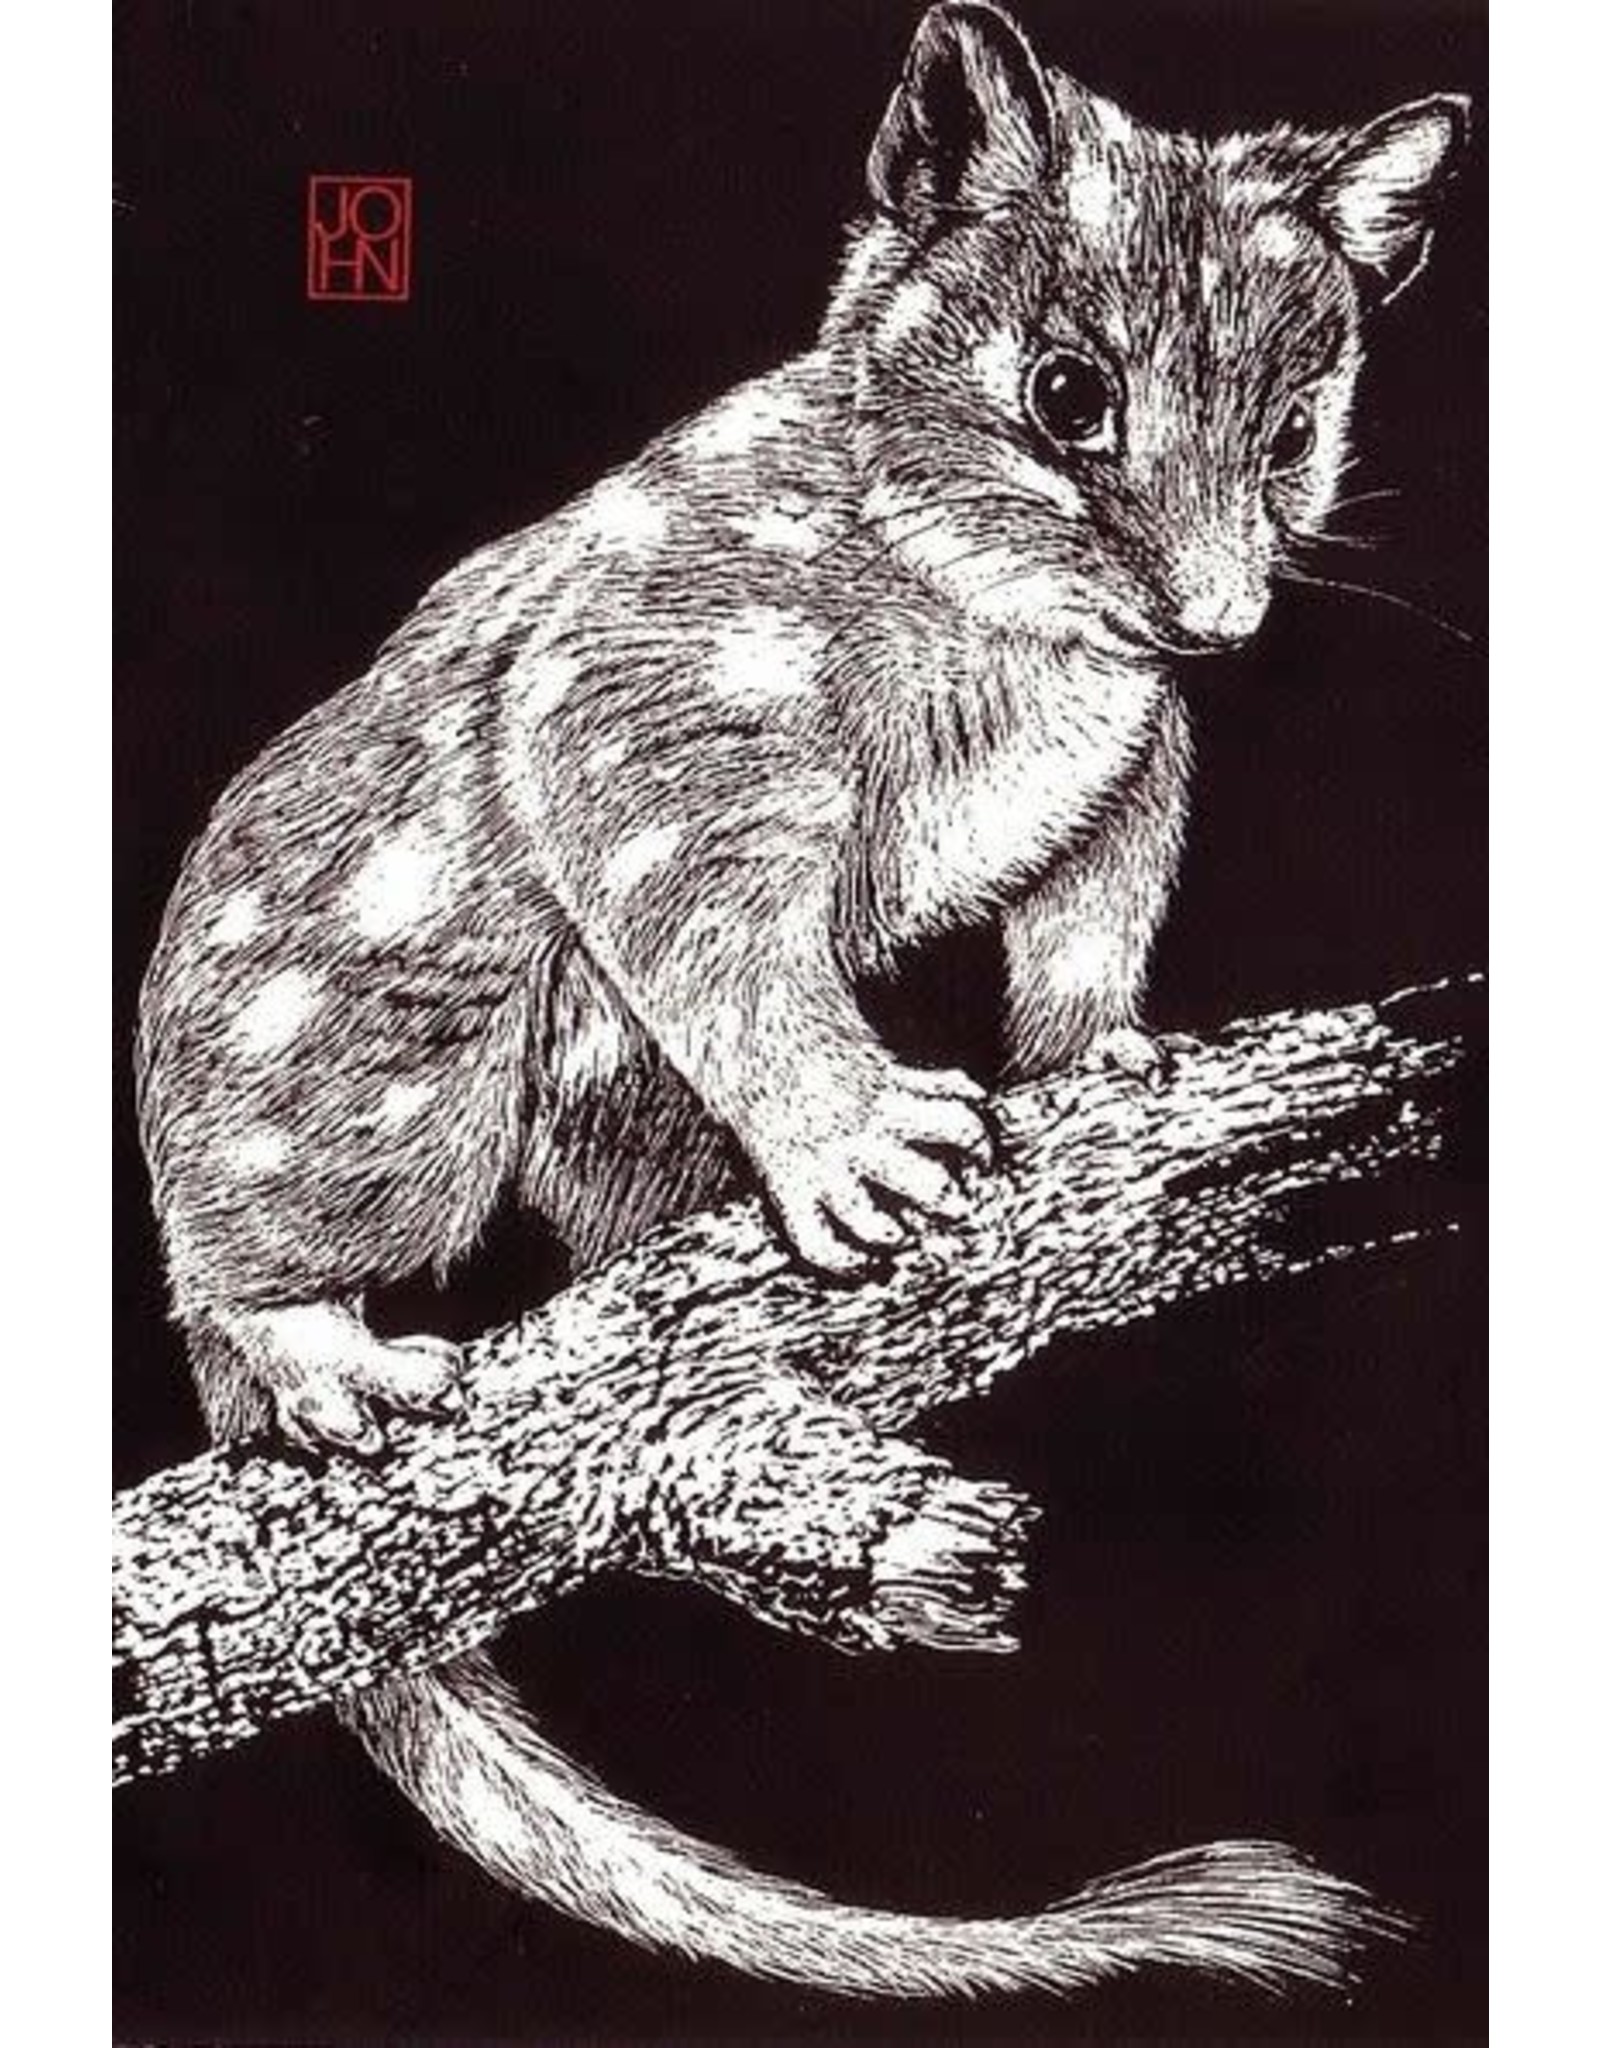 Fauna Cards designed by John Payne